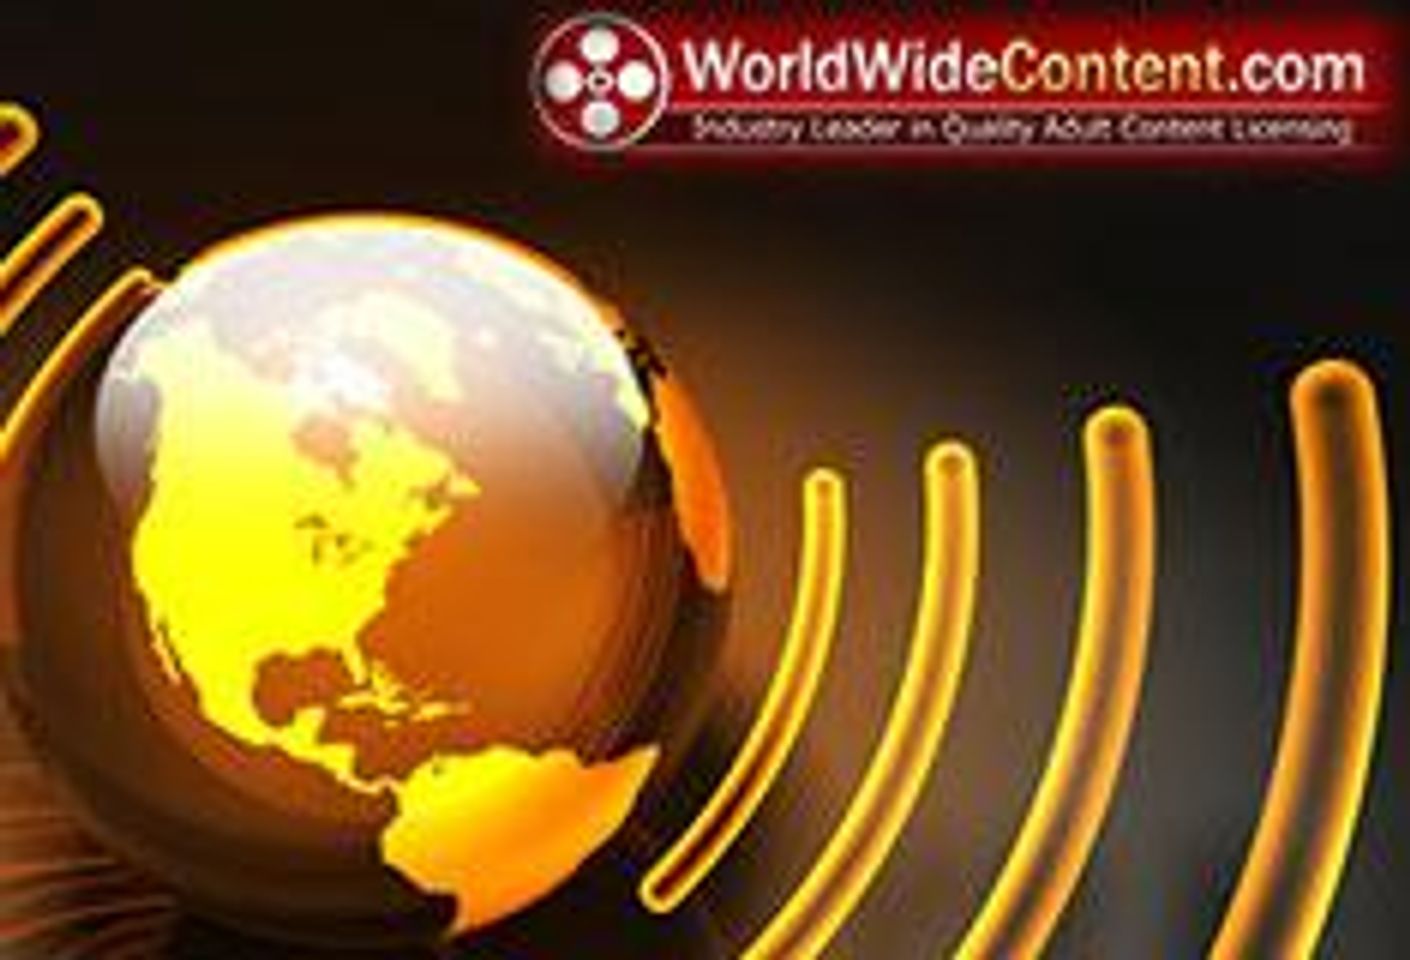 Wayne Enterprises Inks Deal with World Wide Content